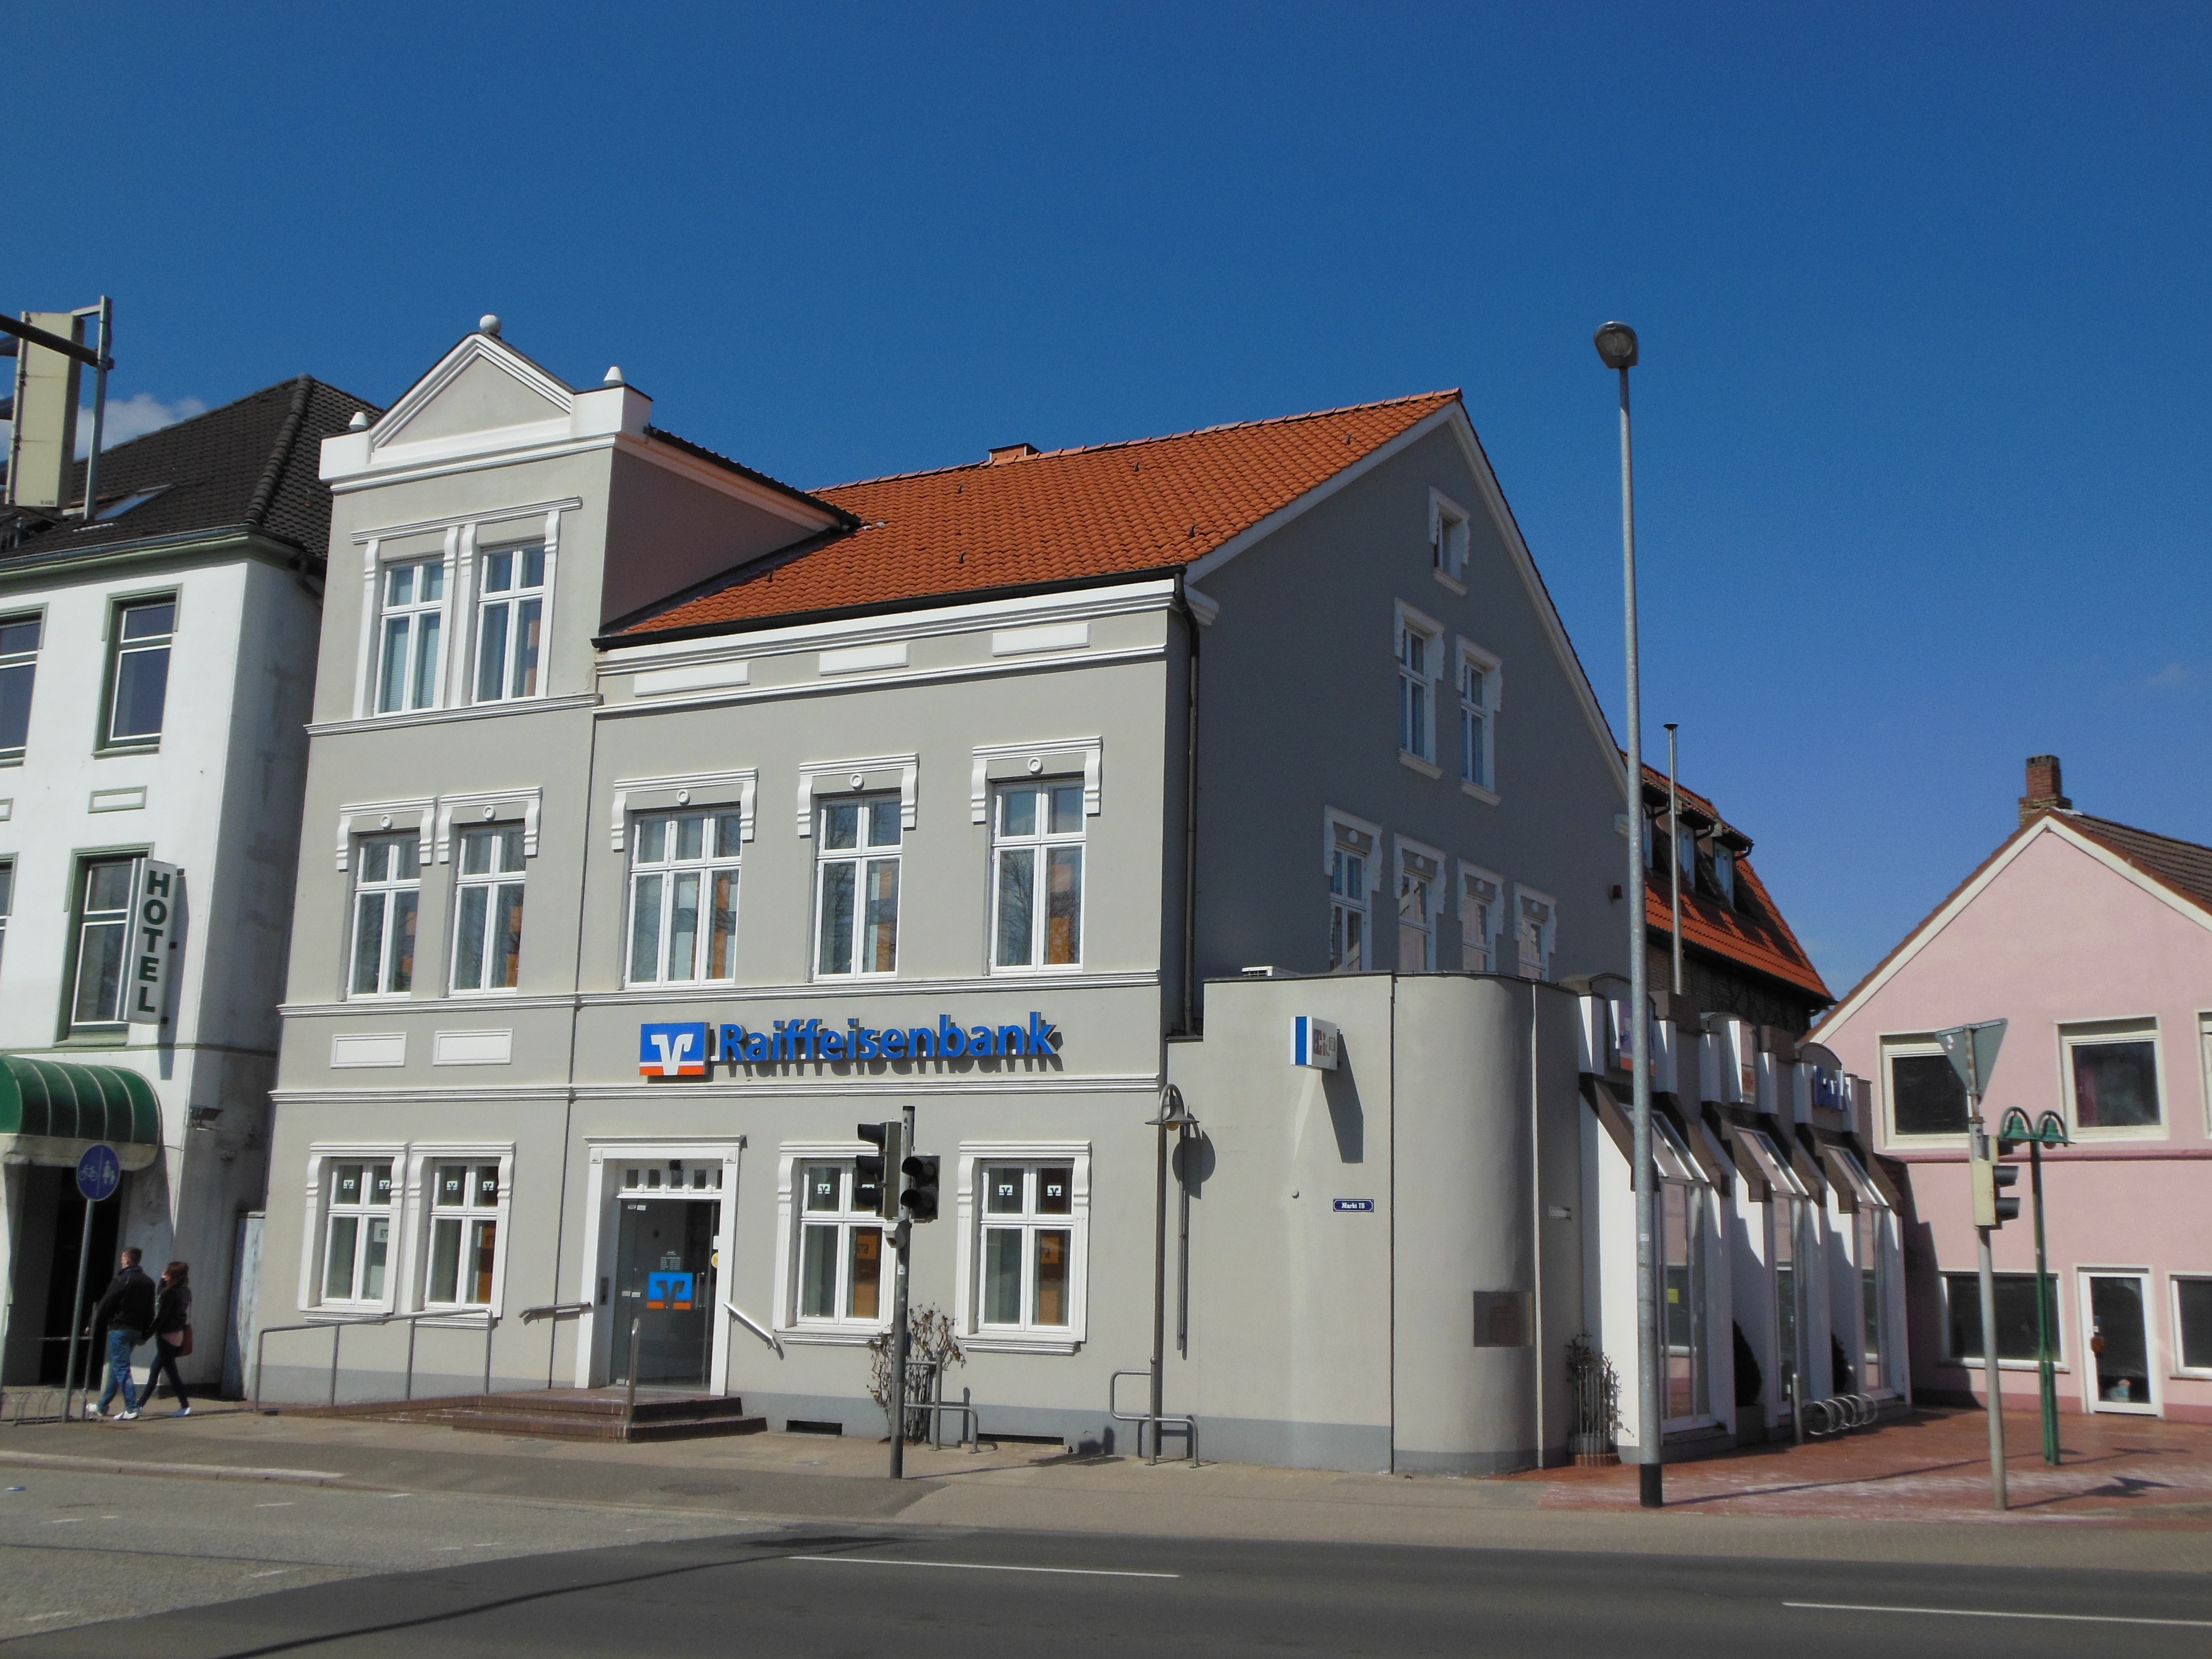 Bank buildings in Schleswig-Holstein.